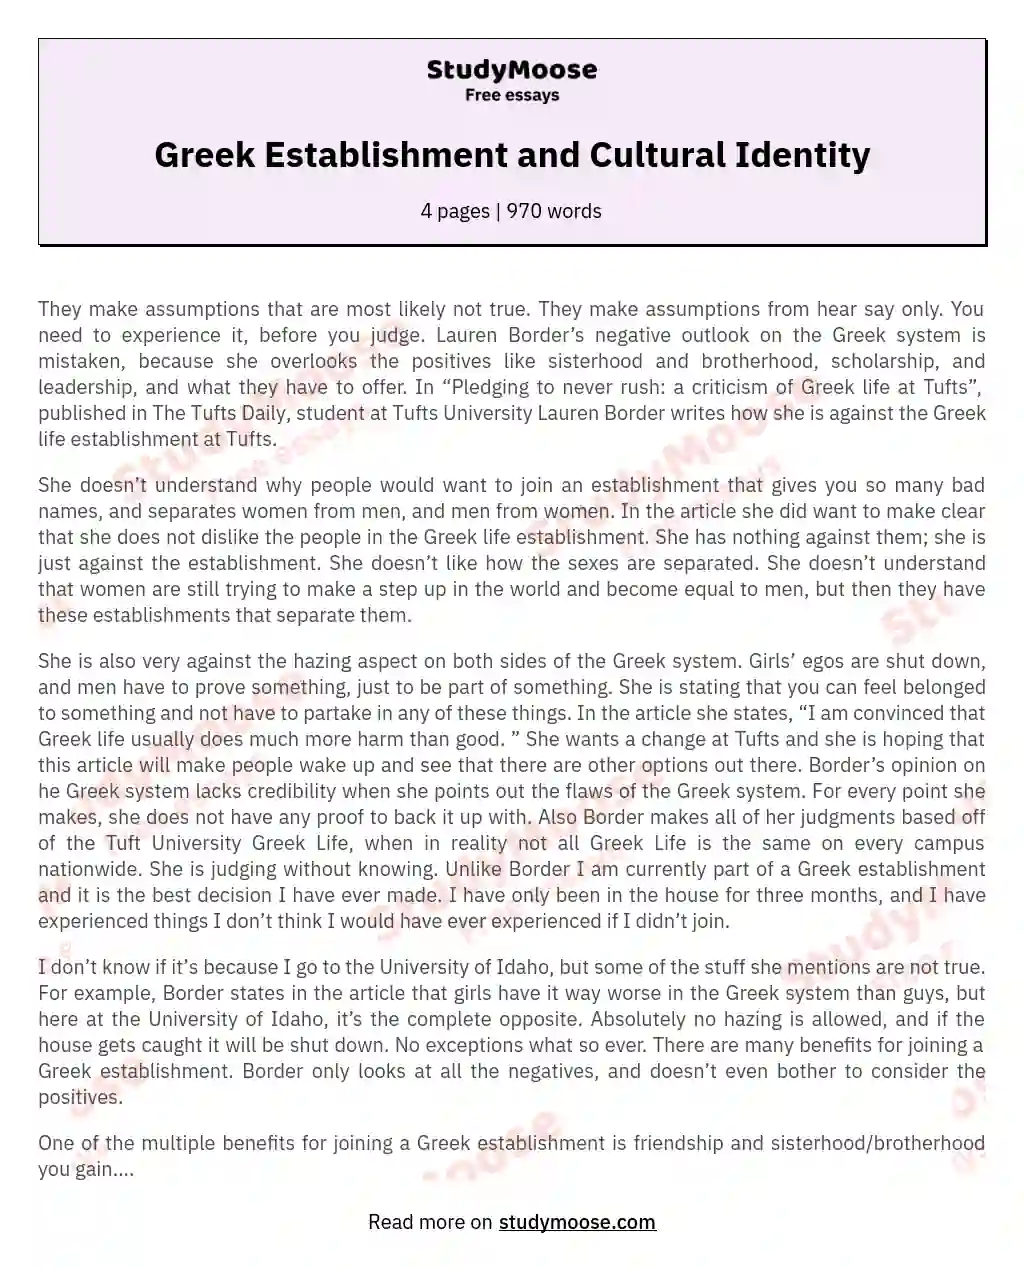 Greek Establishment and Cultural Identity essay